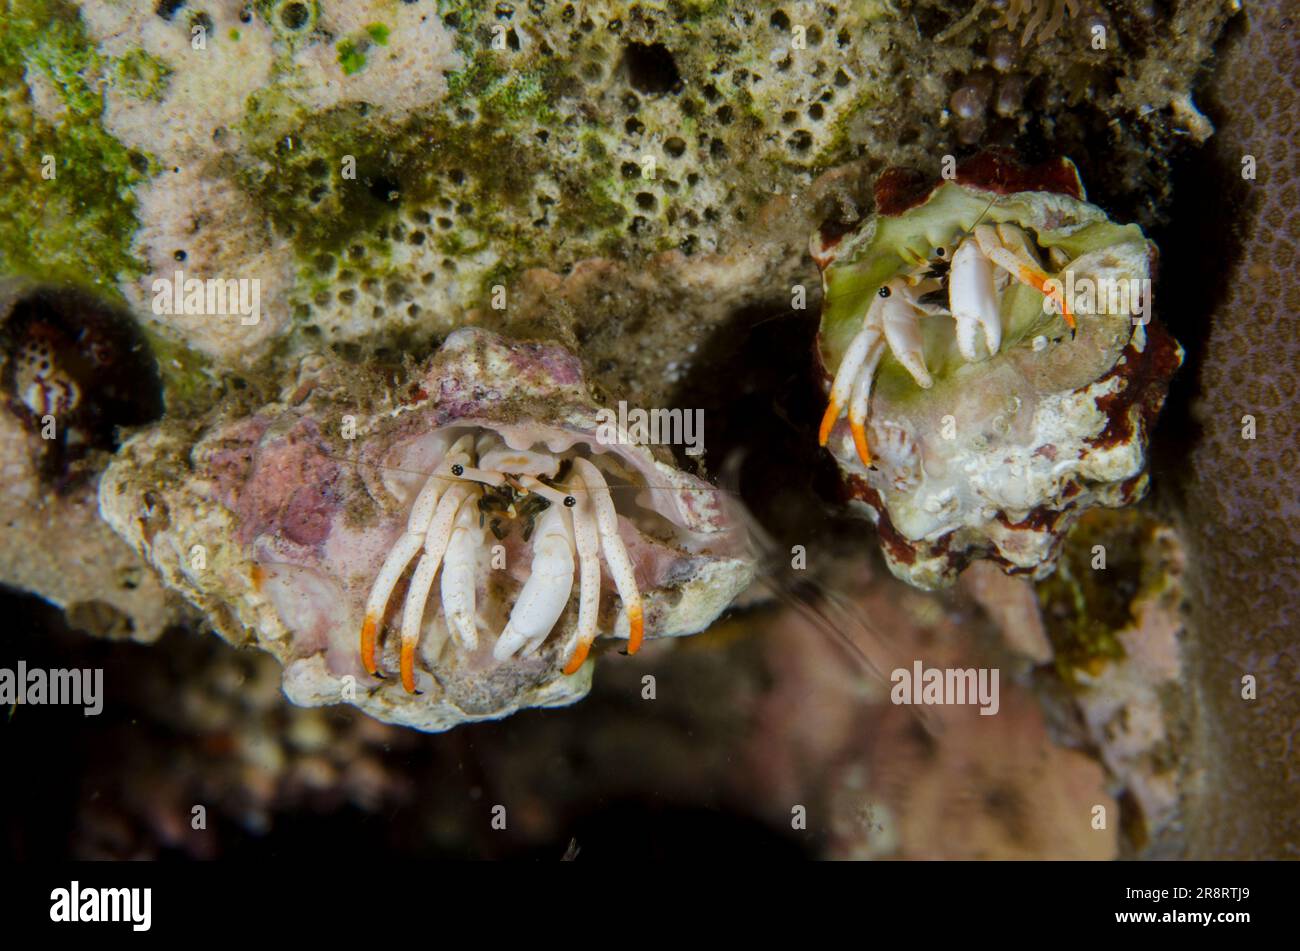 Pair of Small White Hermit Crabs, Calcinus minutus, in shell, night dive, Pyramids dive site, Amed, Karangasem Regency, Bali, Indonesia, Indian Ocean Stock Photo